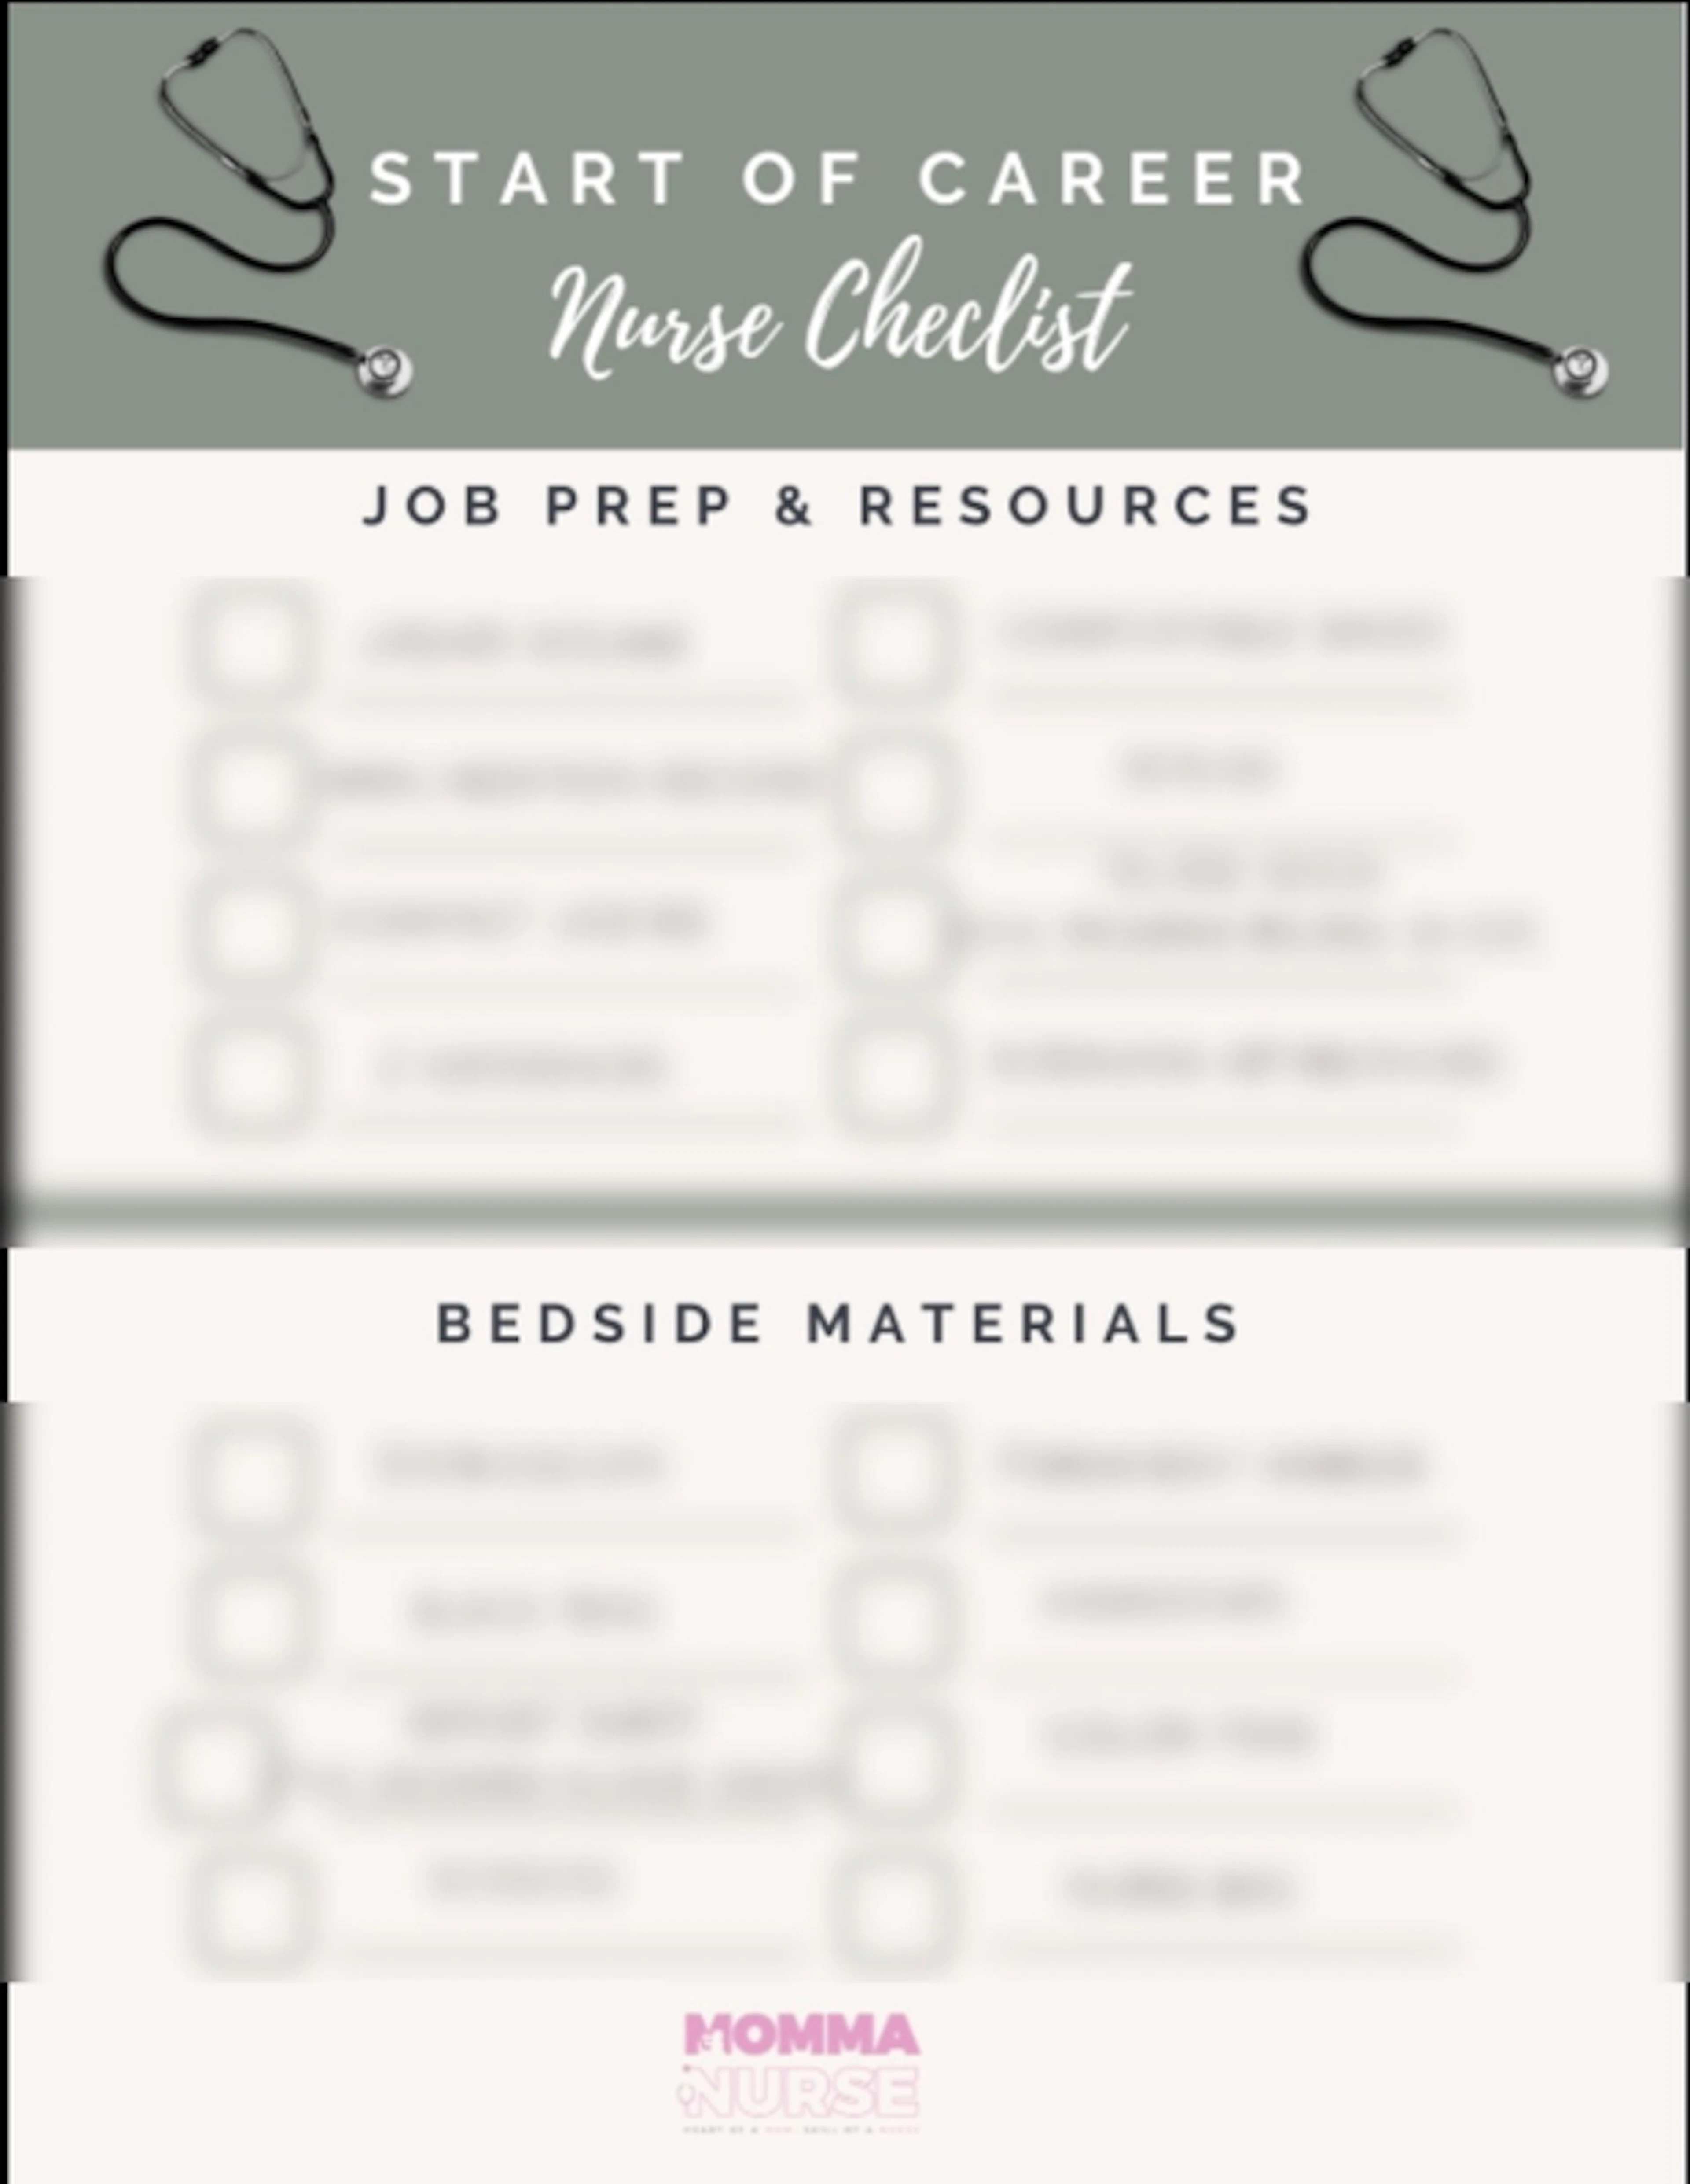 New Nurse Checklist